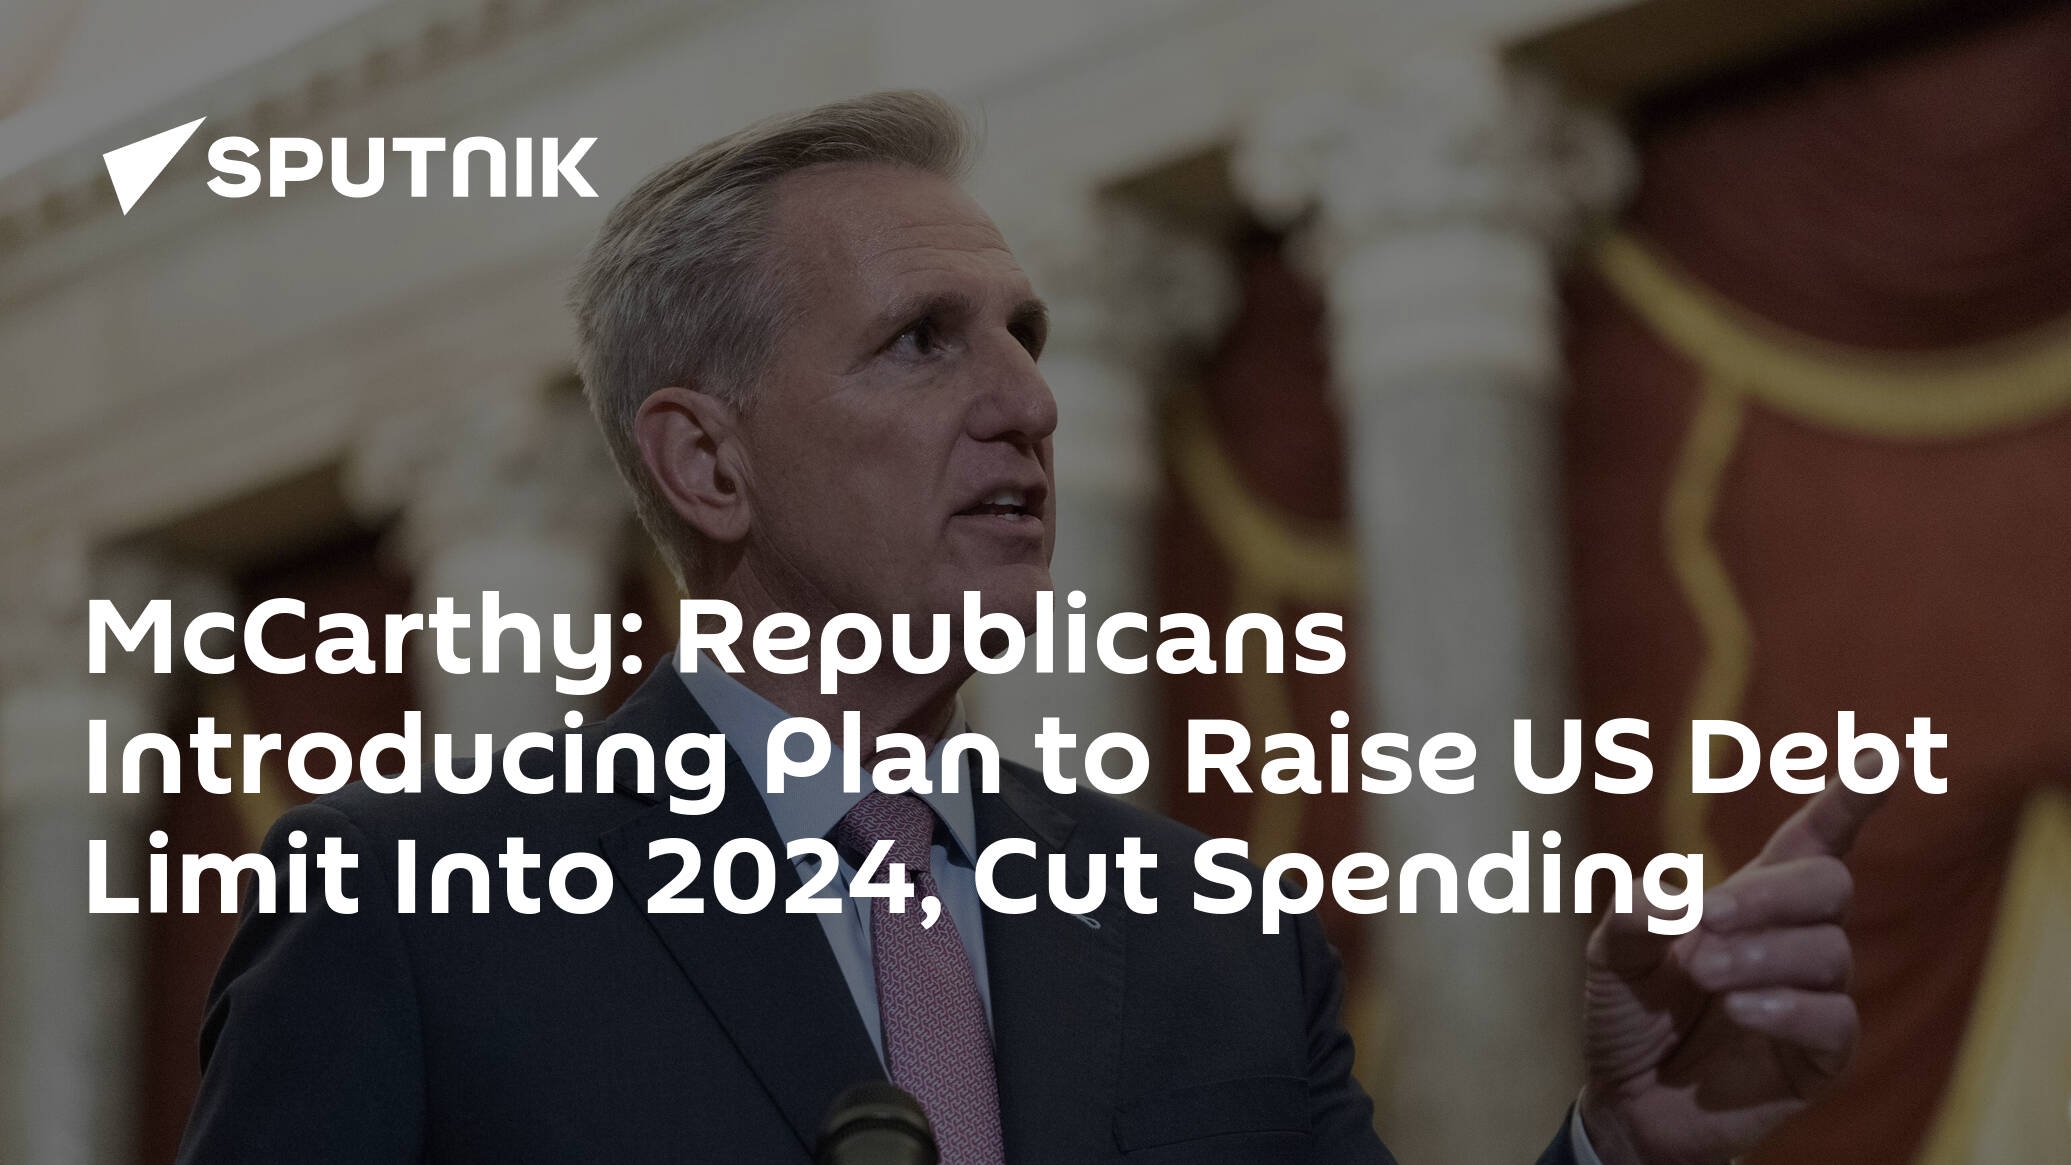 McCarthy: Republicans Introducing Plan to Raise US Debt Limit Into 2024, Cut Spending